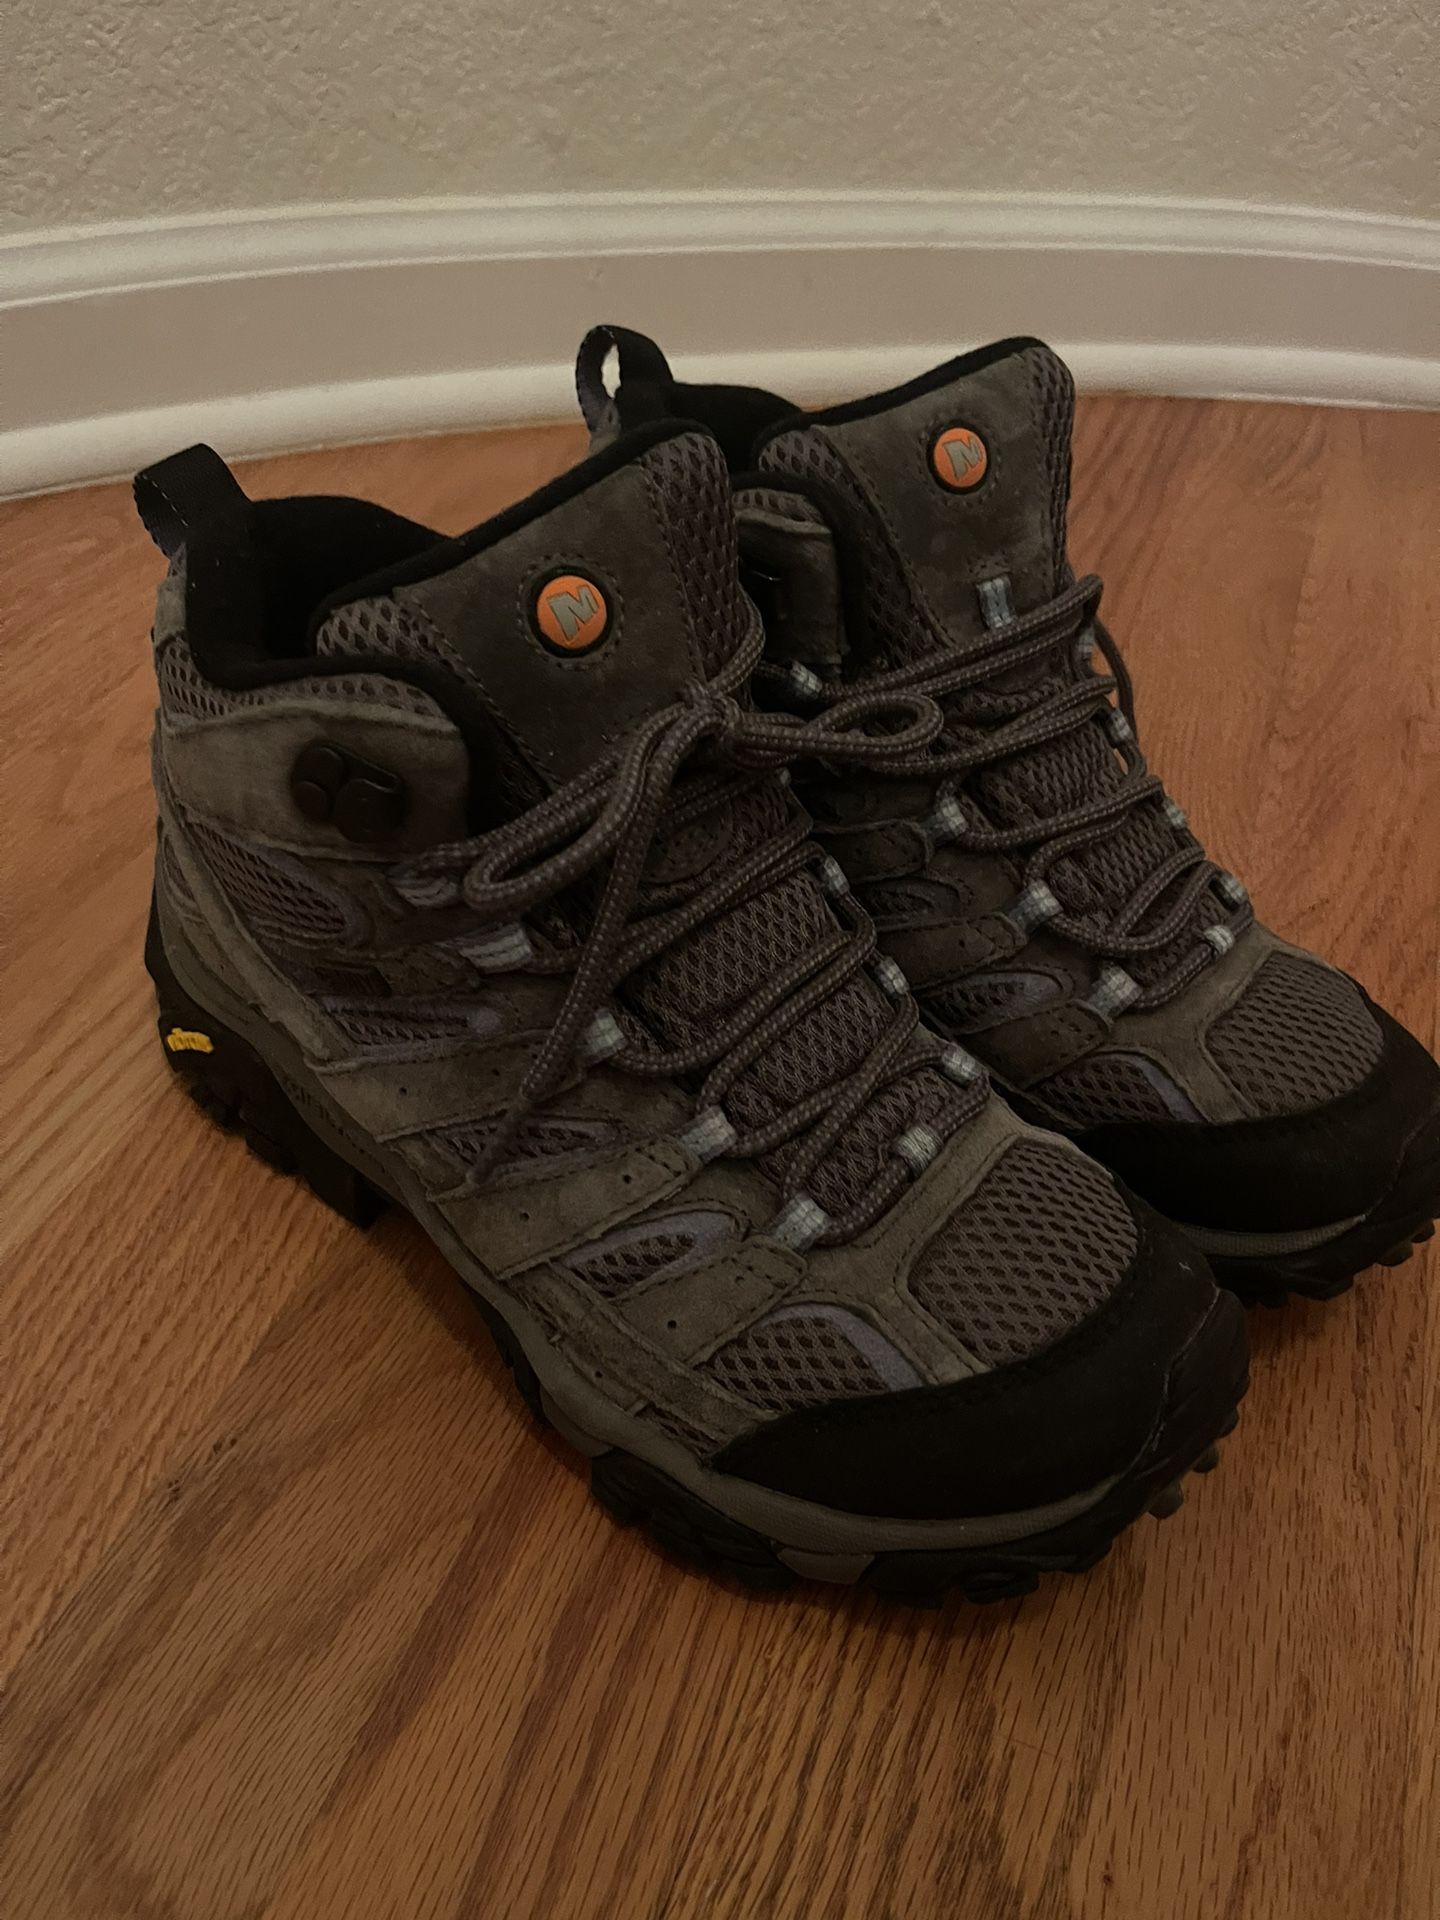 Merrel Moab Women’s Hiking Boots Size 7.5